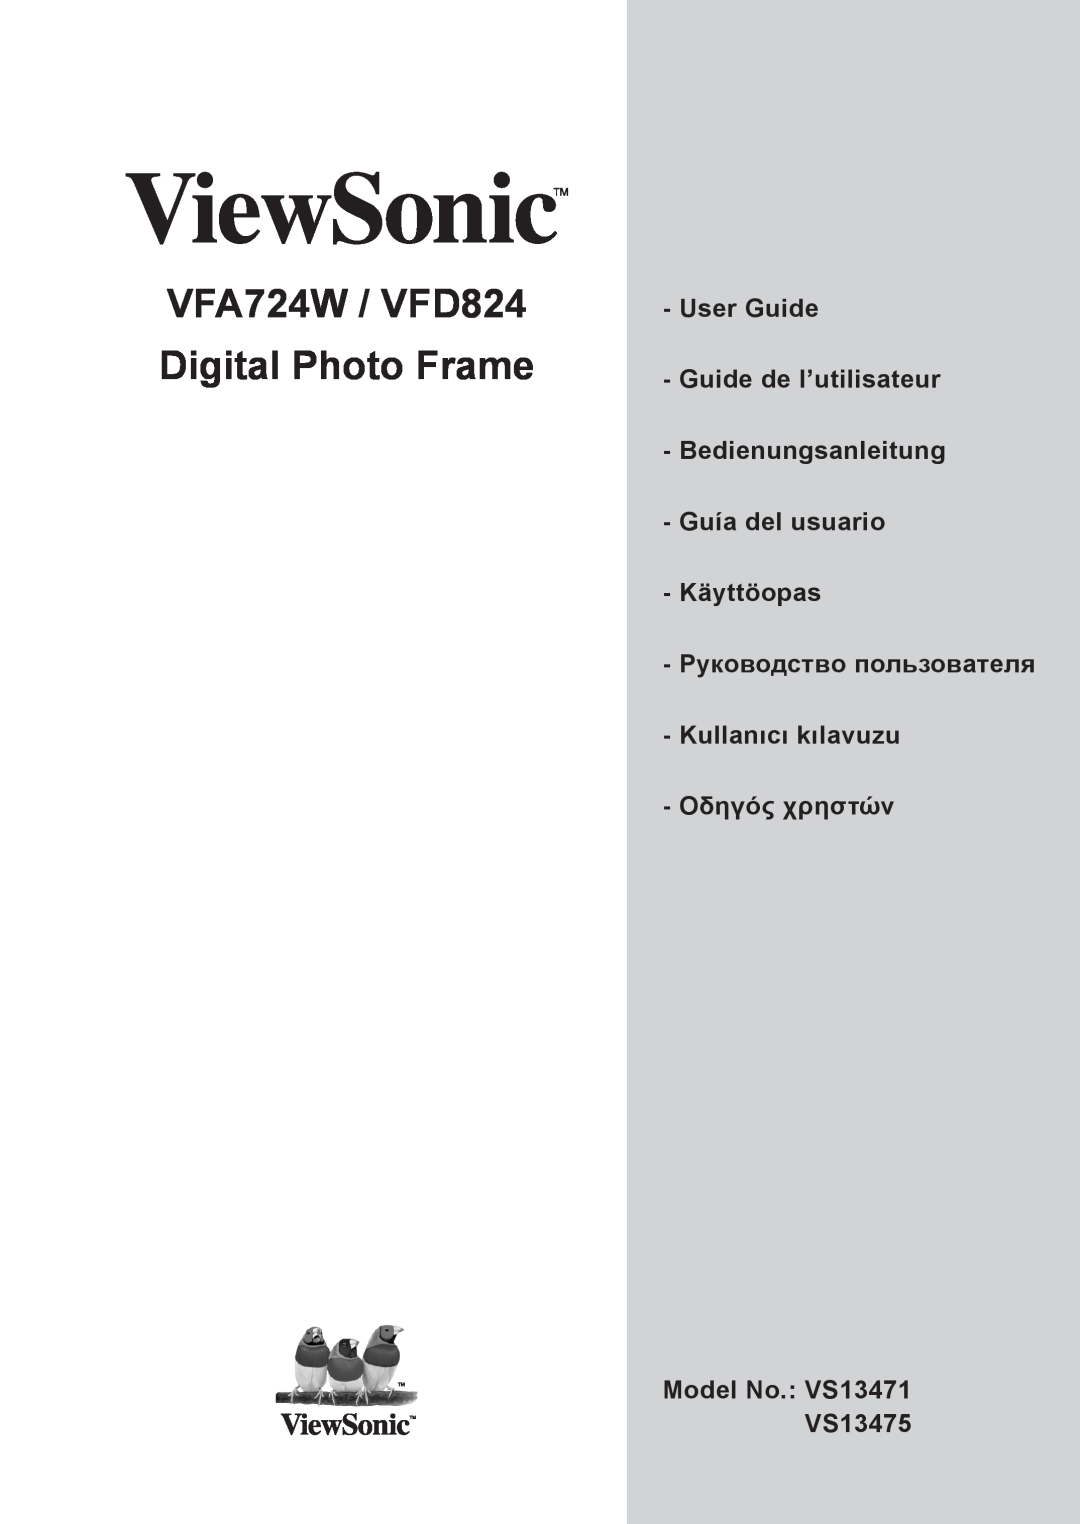 ViewSonic VS13475 manual VFA724W / VFD824 Digital Photo Frame, User Guide Guide de l’utilisateur Bedienungsanleitung 